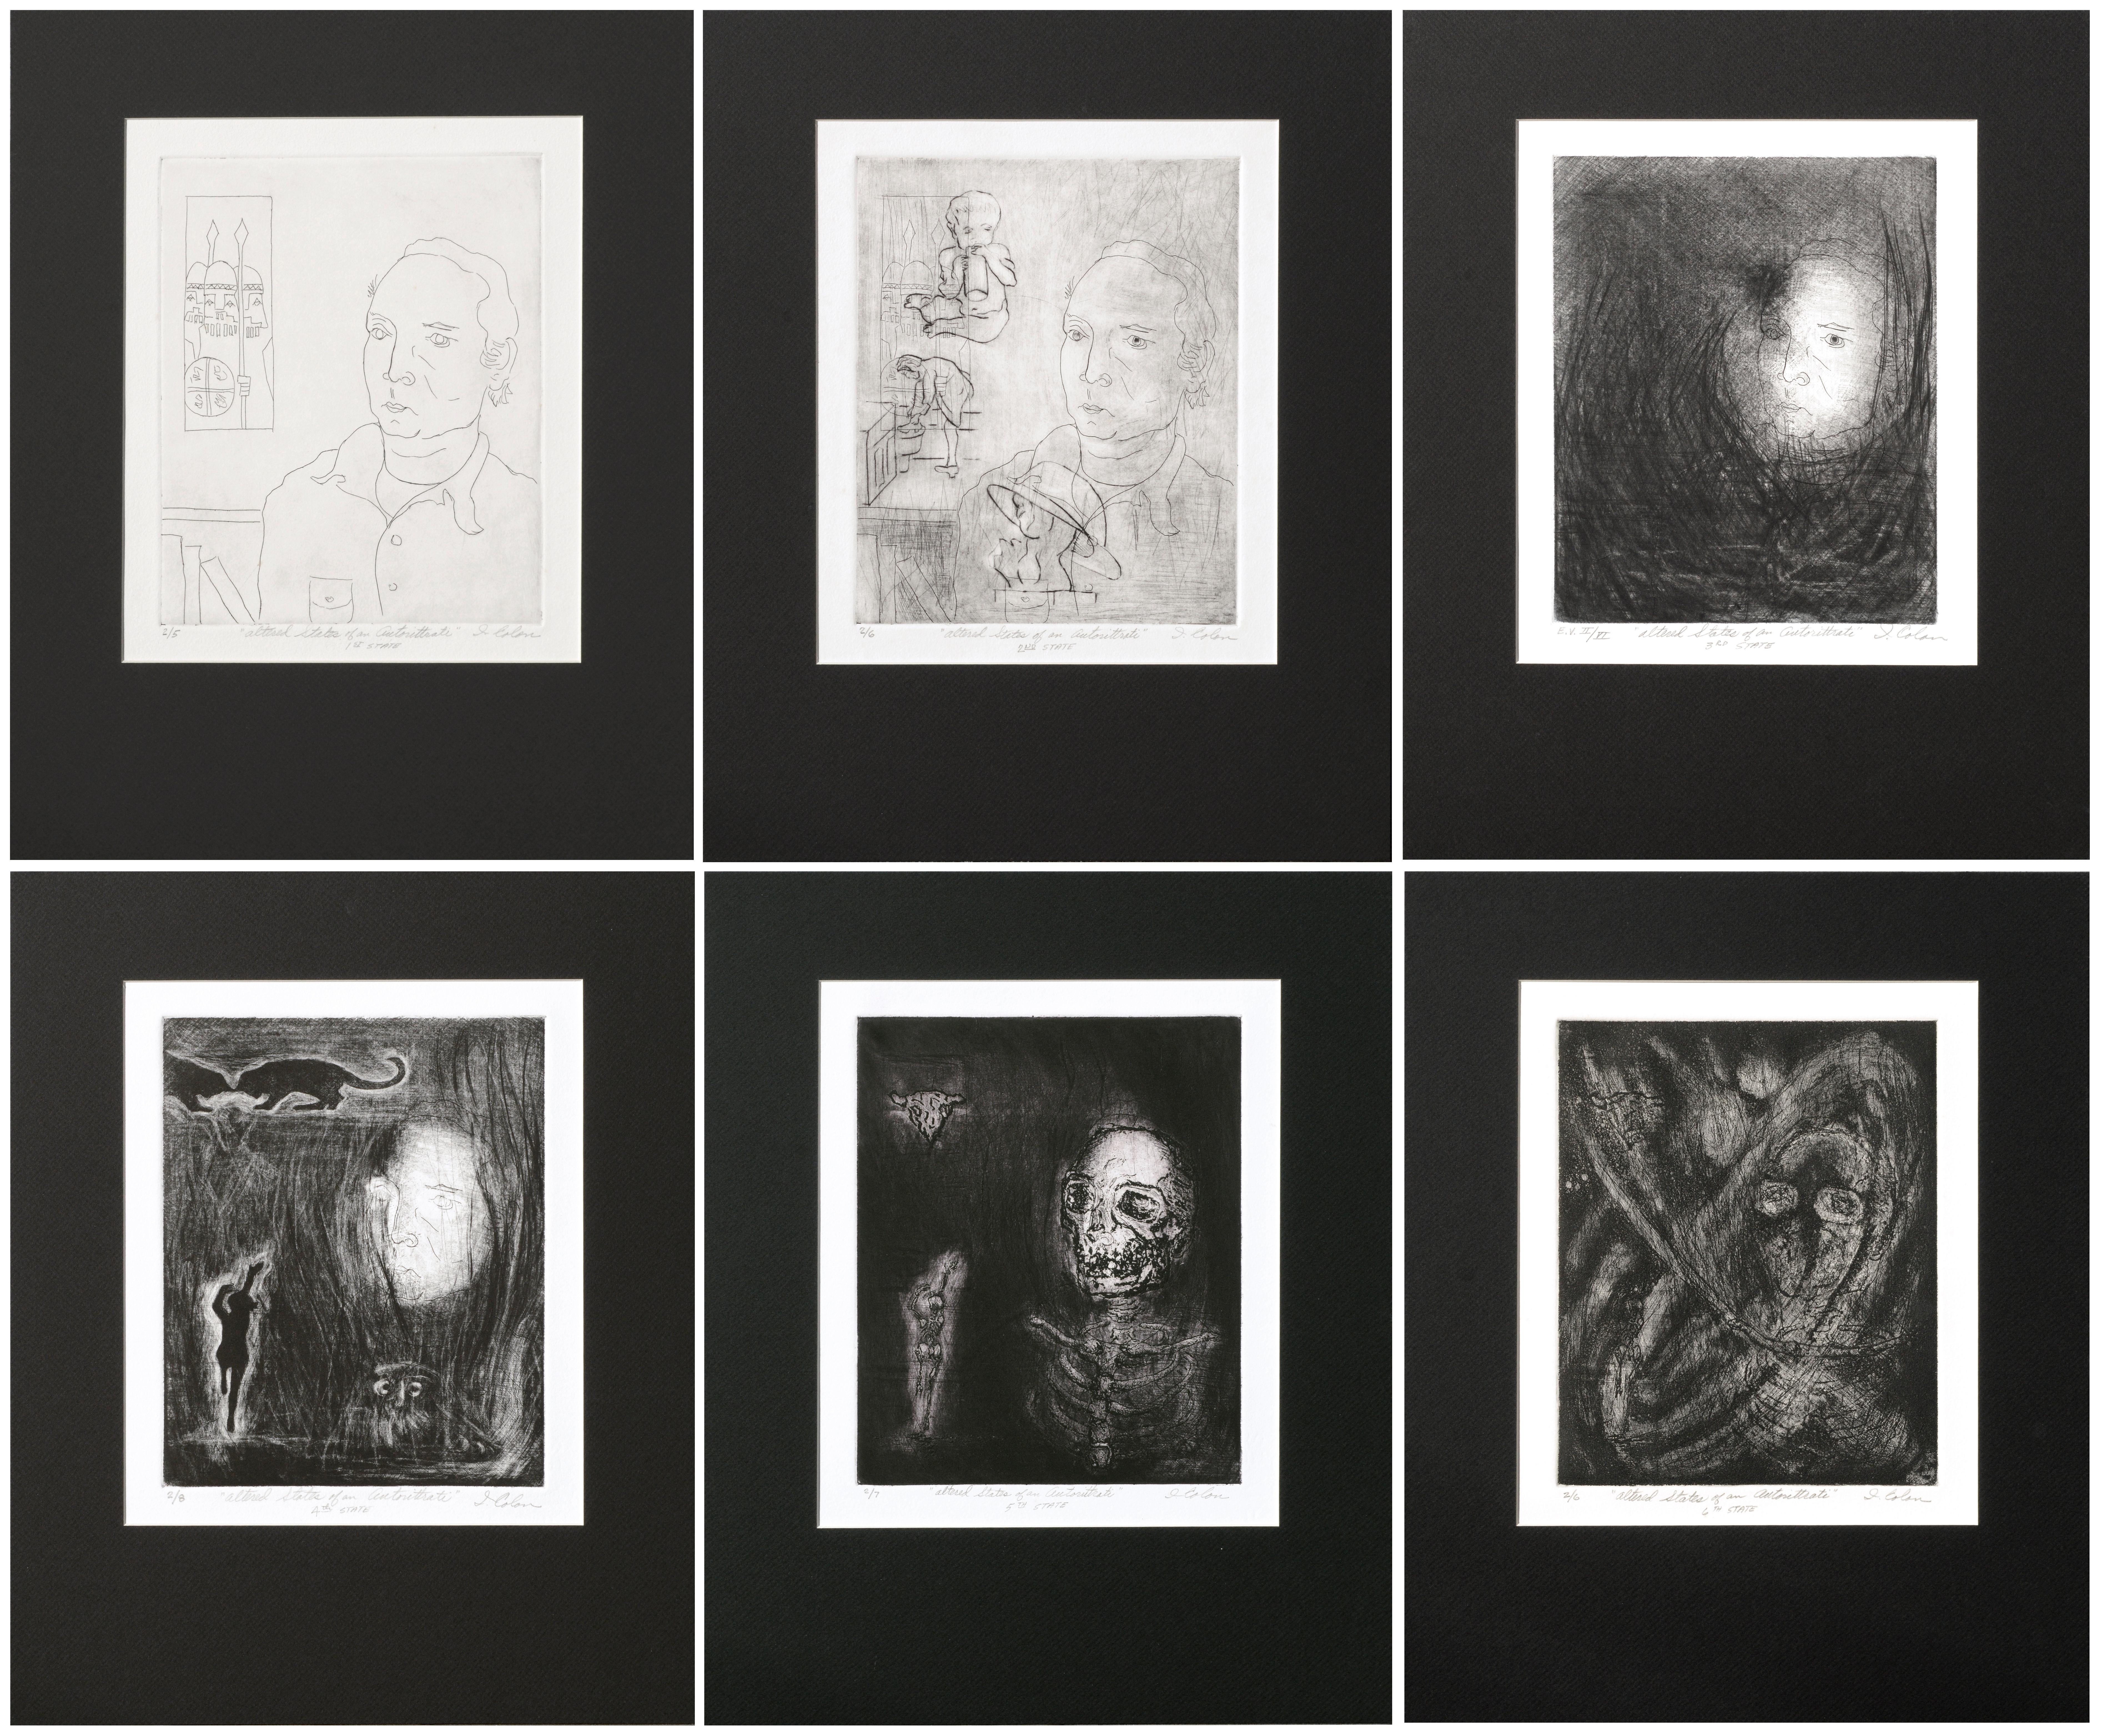 I. Colon Figurative Print - "Altered States of an Autorittrati", Modernist Self-Portrait Complete Series (6)